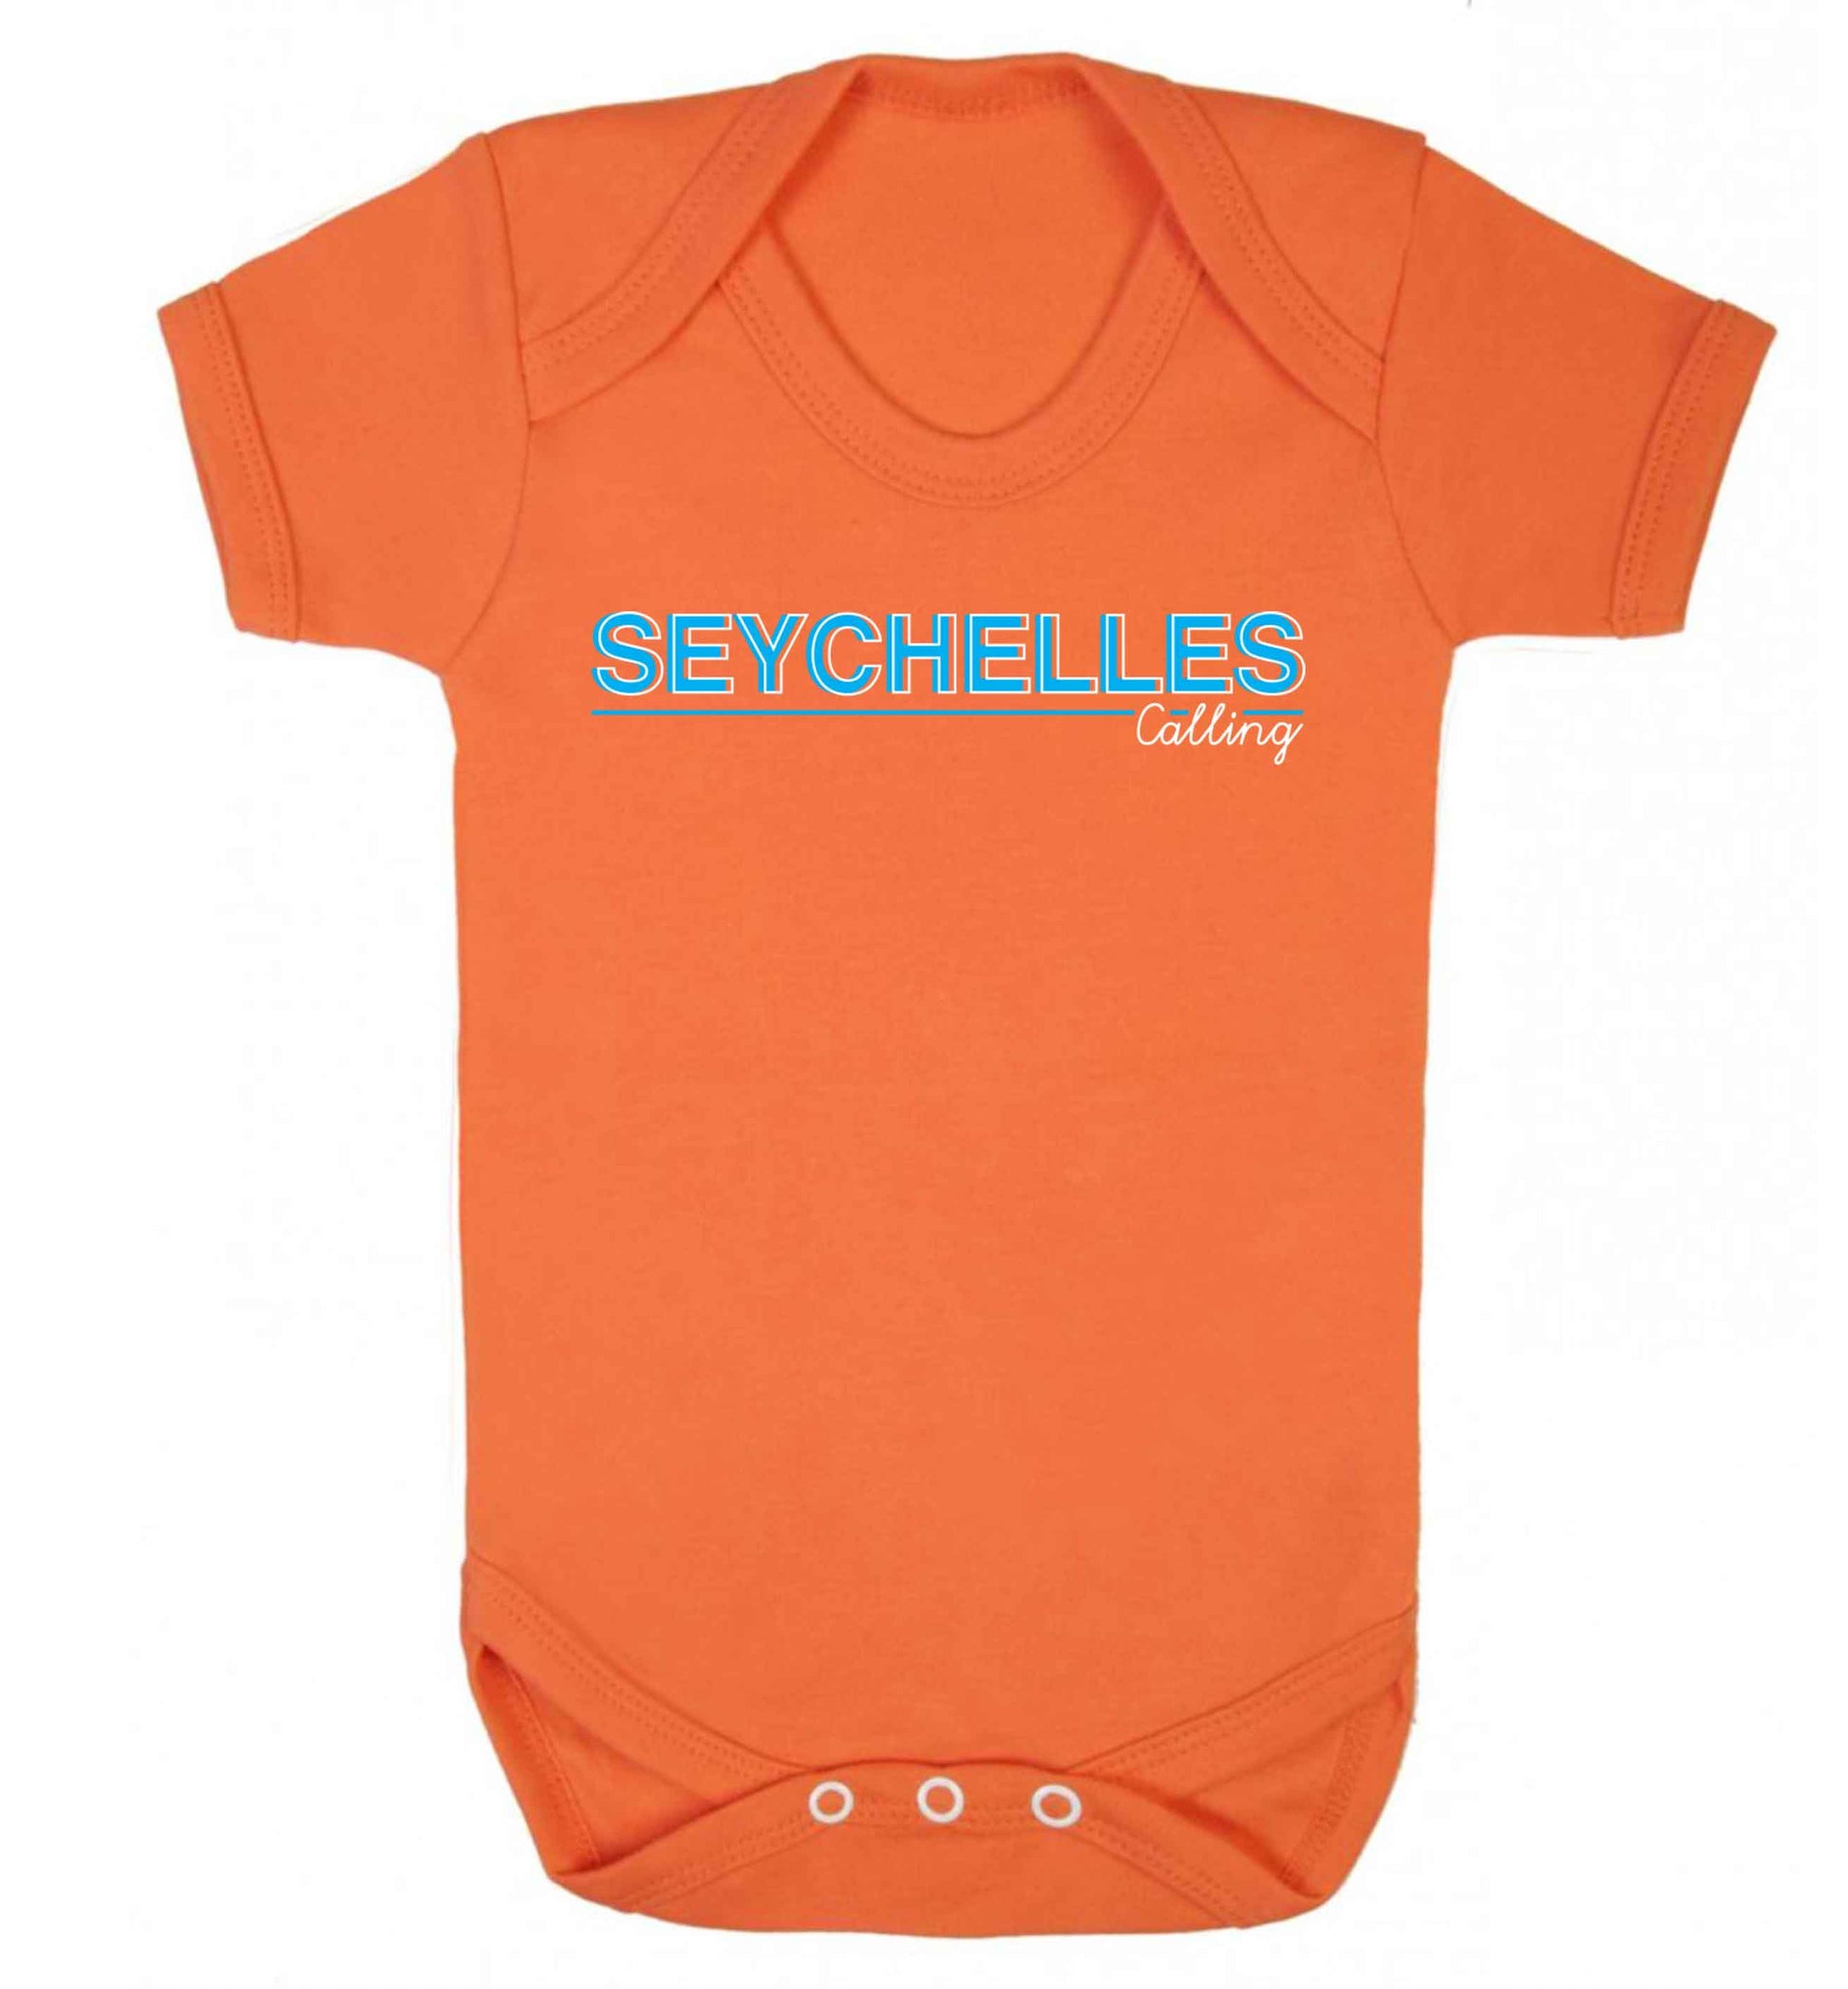 Seychelles calling Baby Vest orange 18-24 months